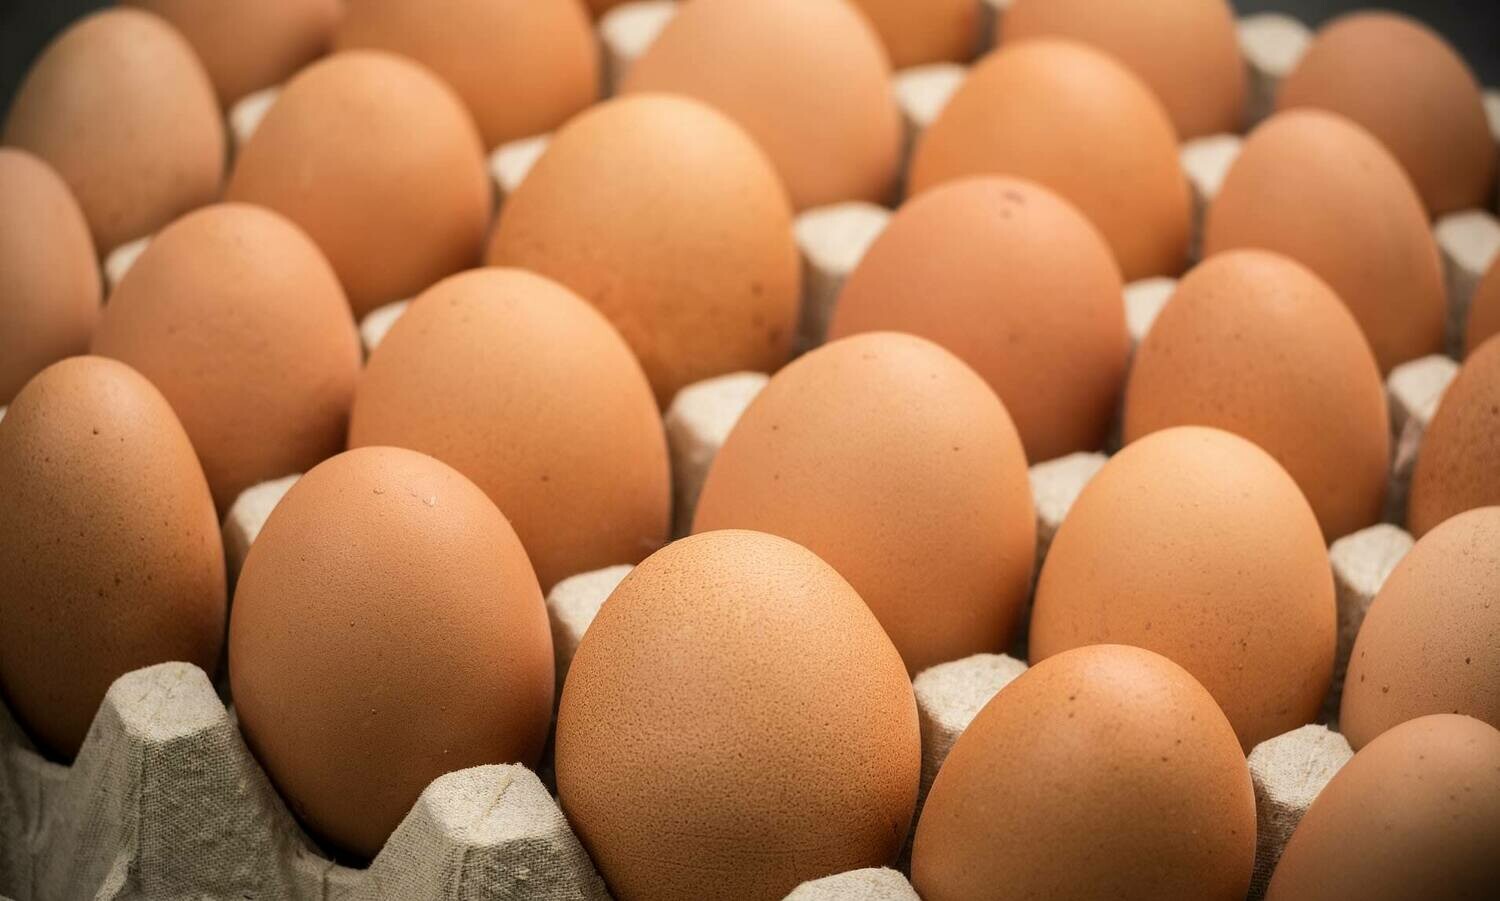 Brown Eggs 黄蛋 一箱180只 时价